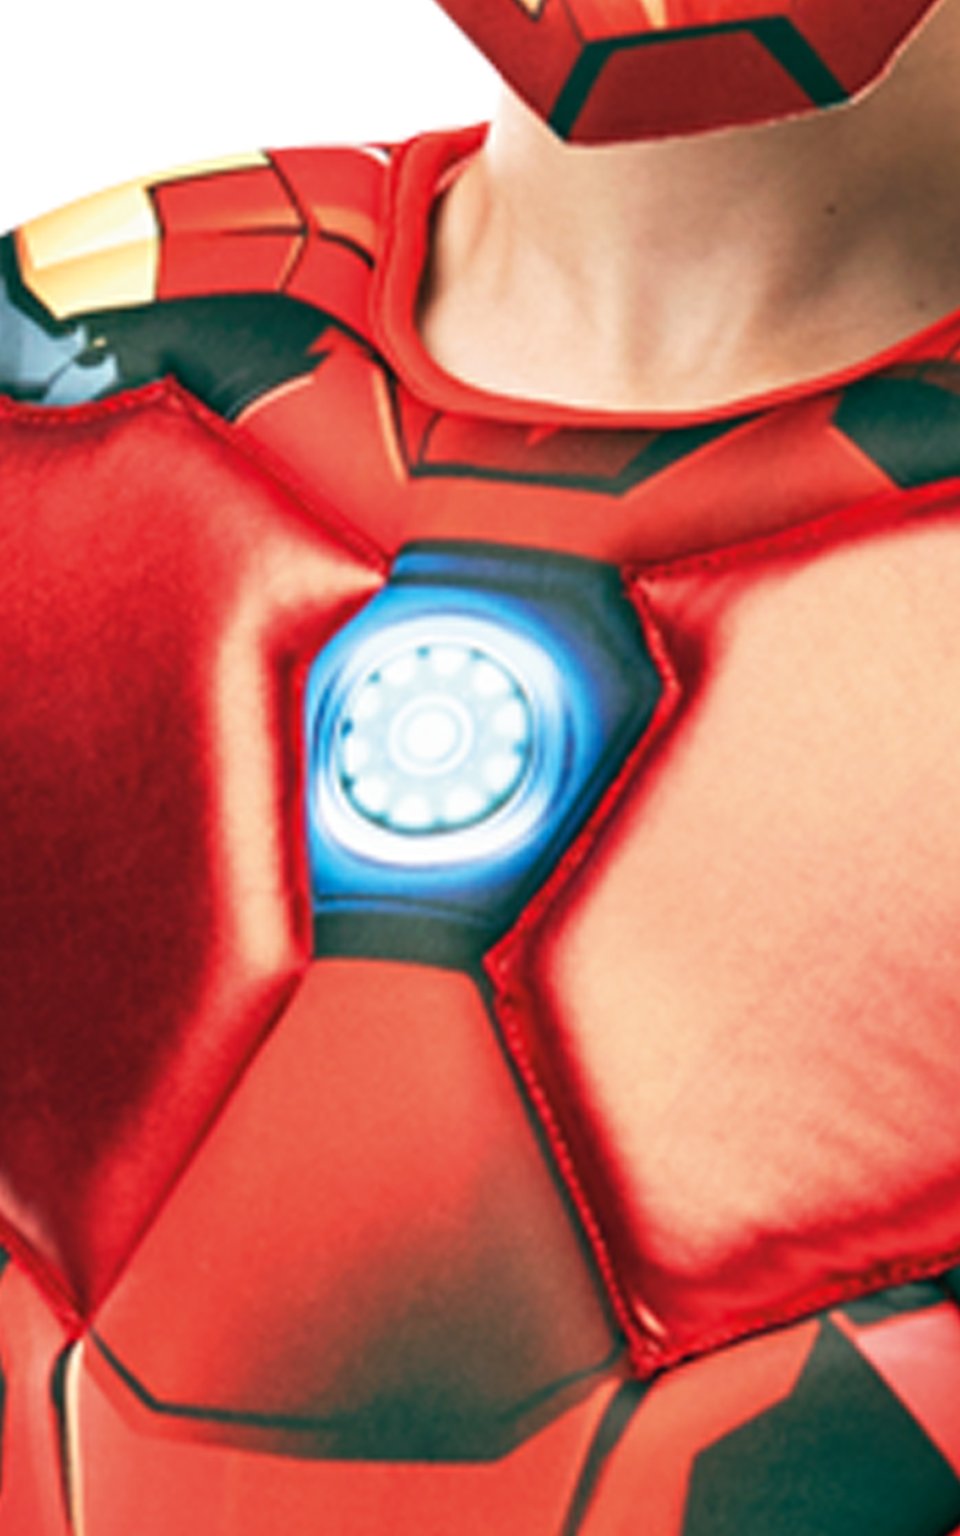 Boys Deluxe Iron Man Costume